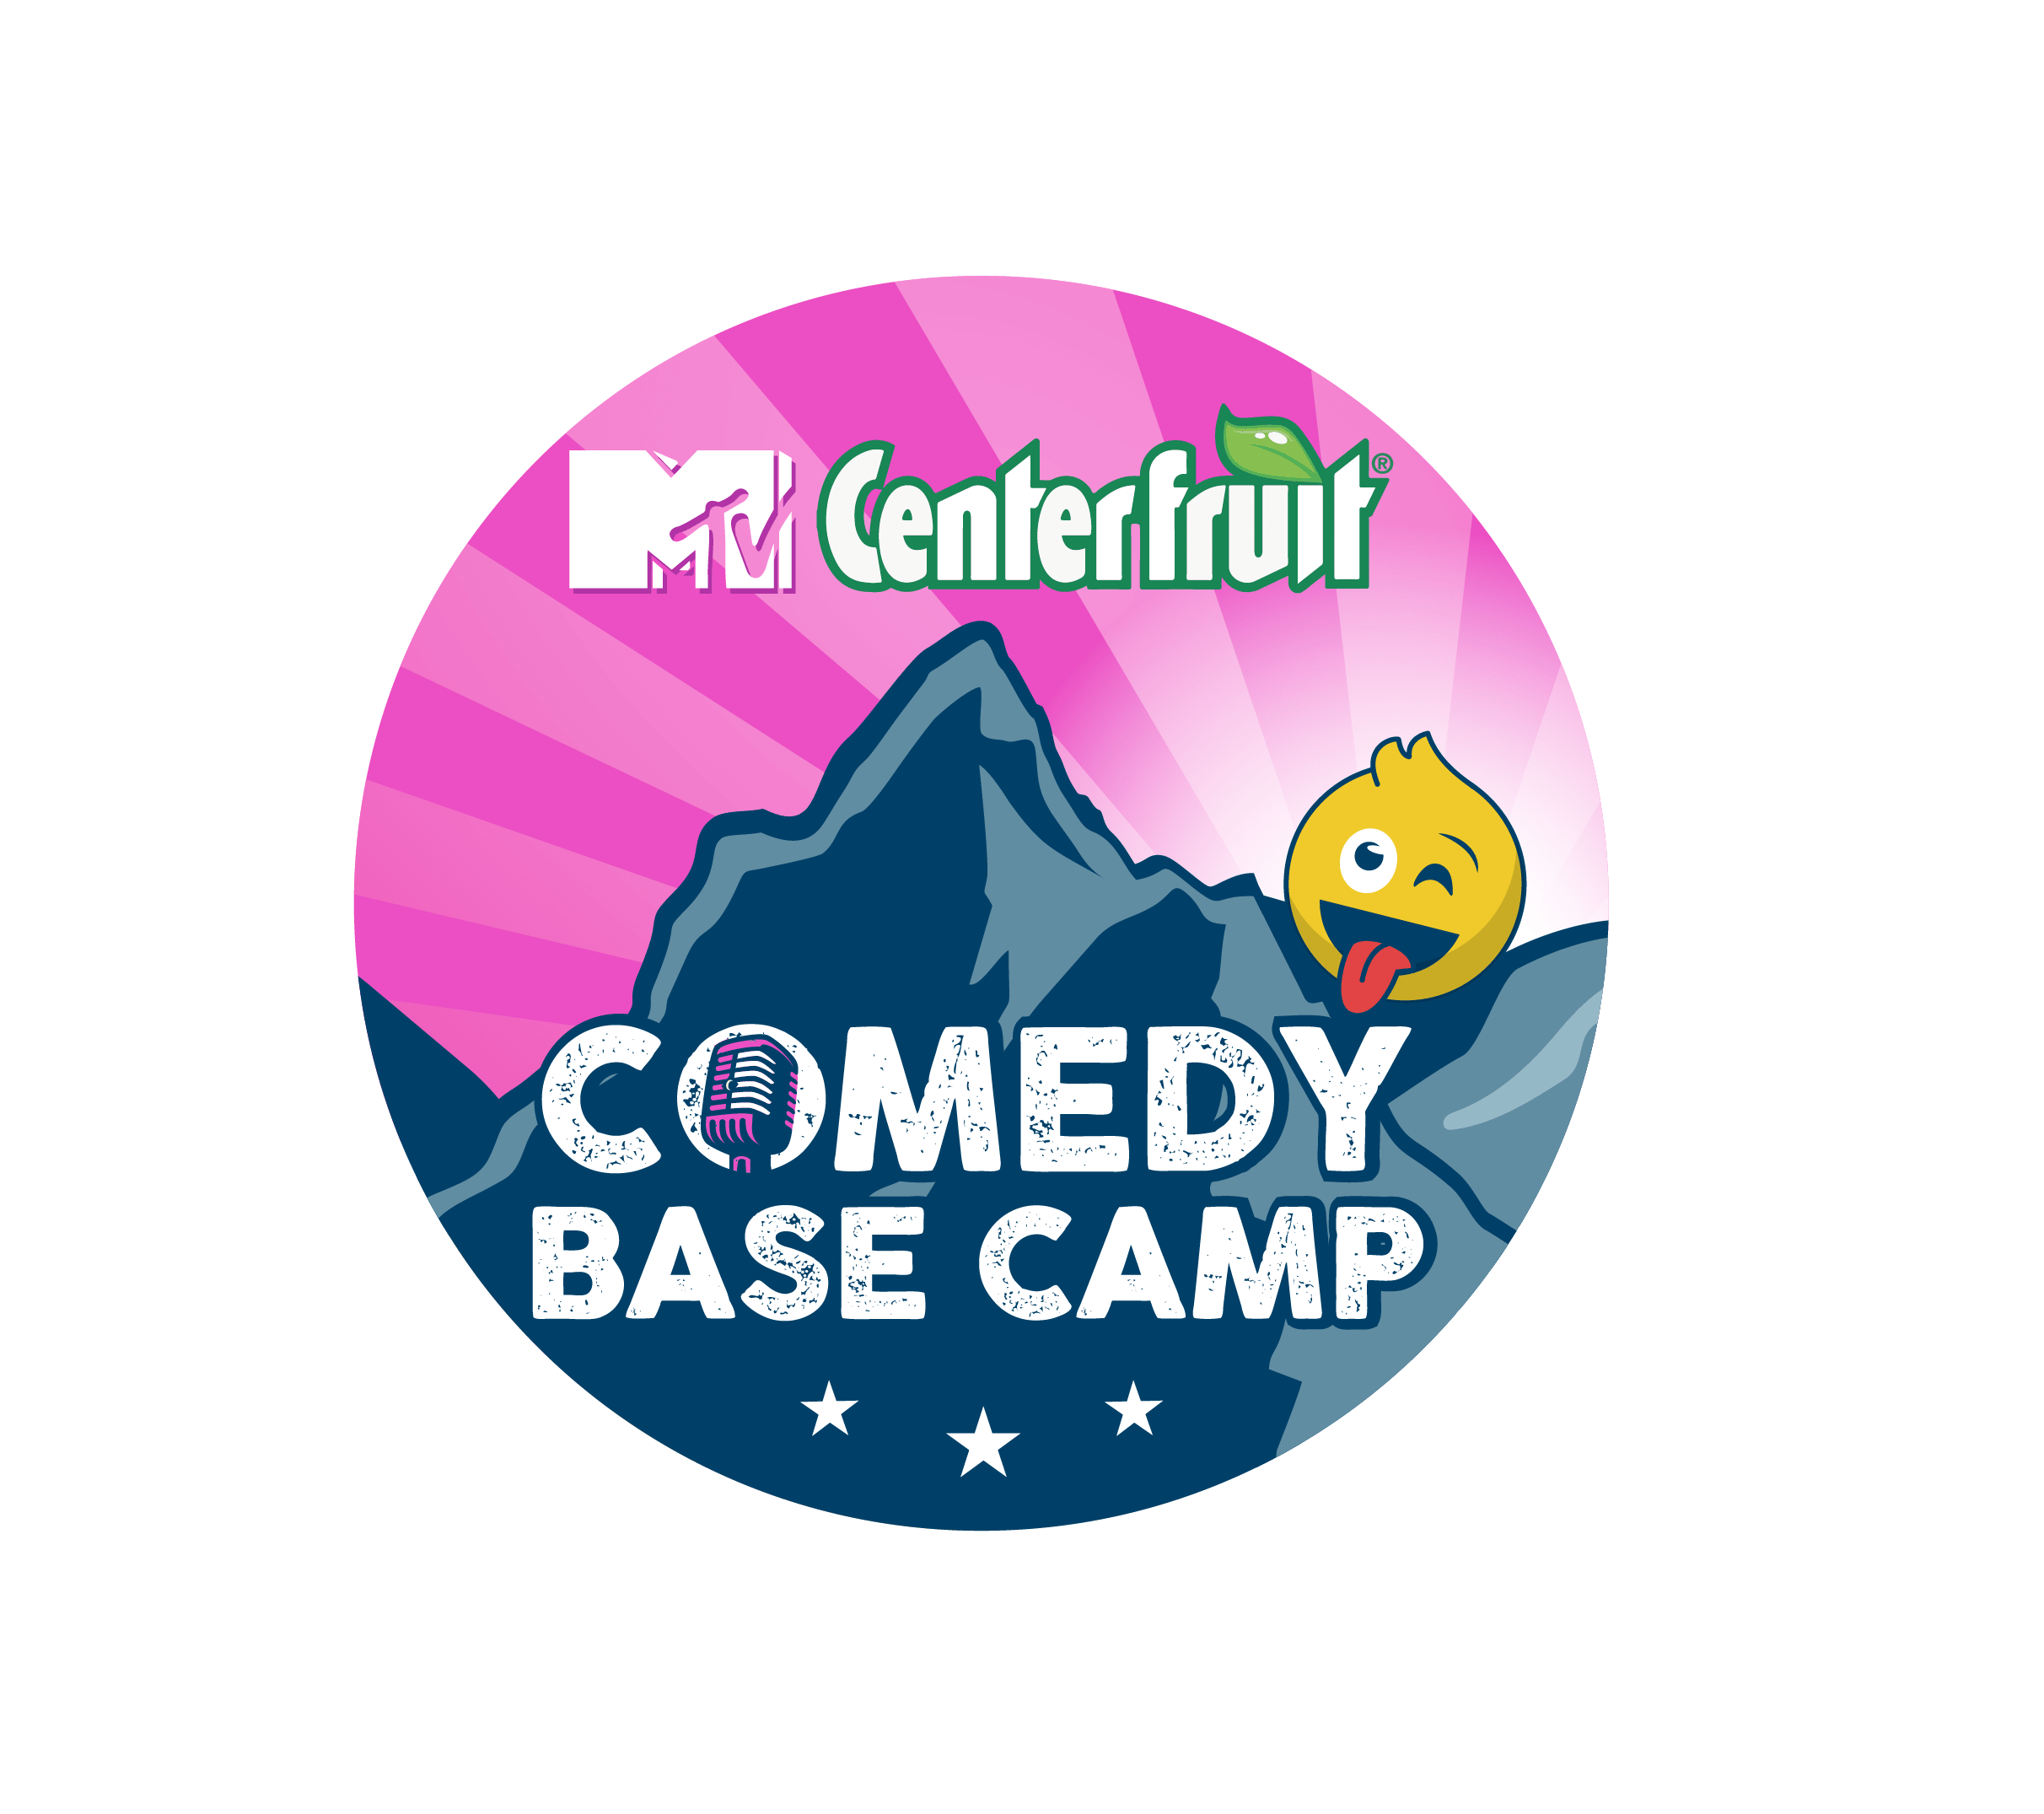 mtv center fruit comedy base camp